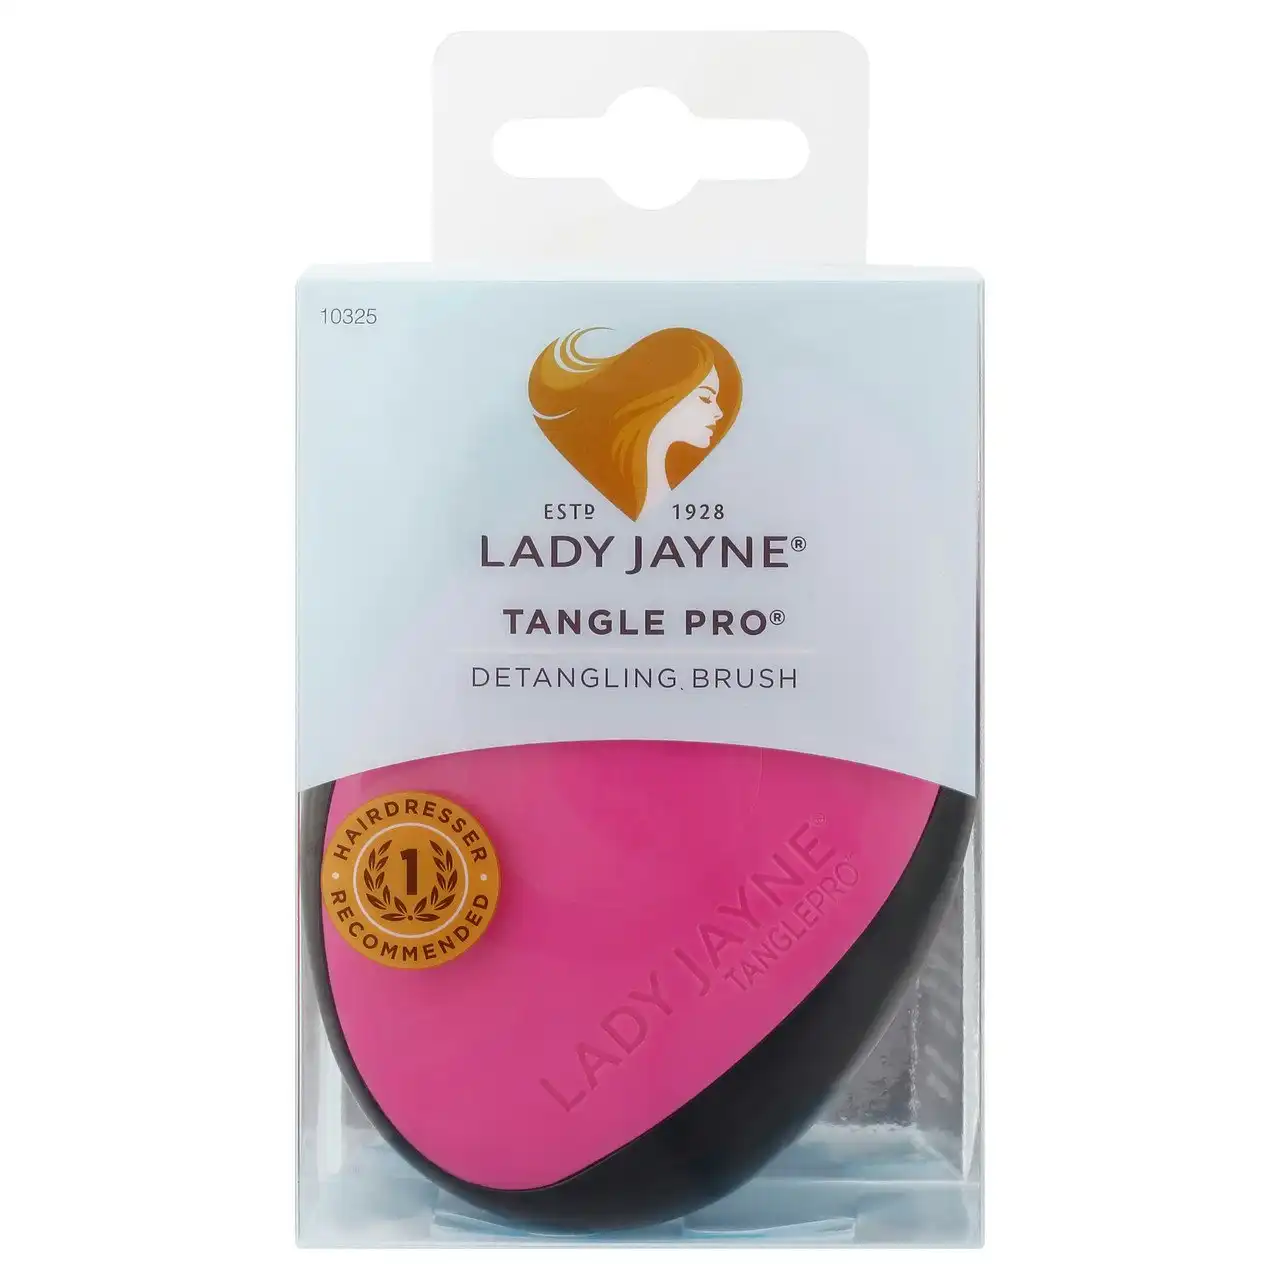 Lady Jayne Tanglepro Detangling Brush - Compact-Sized